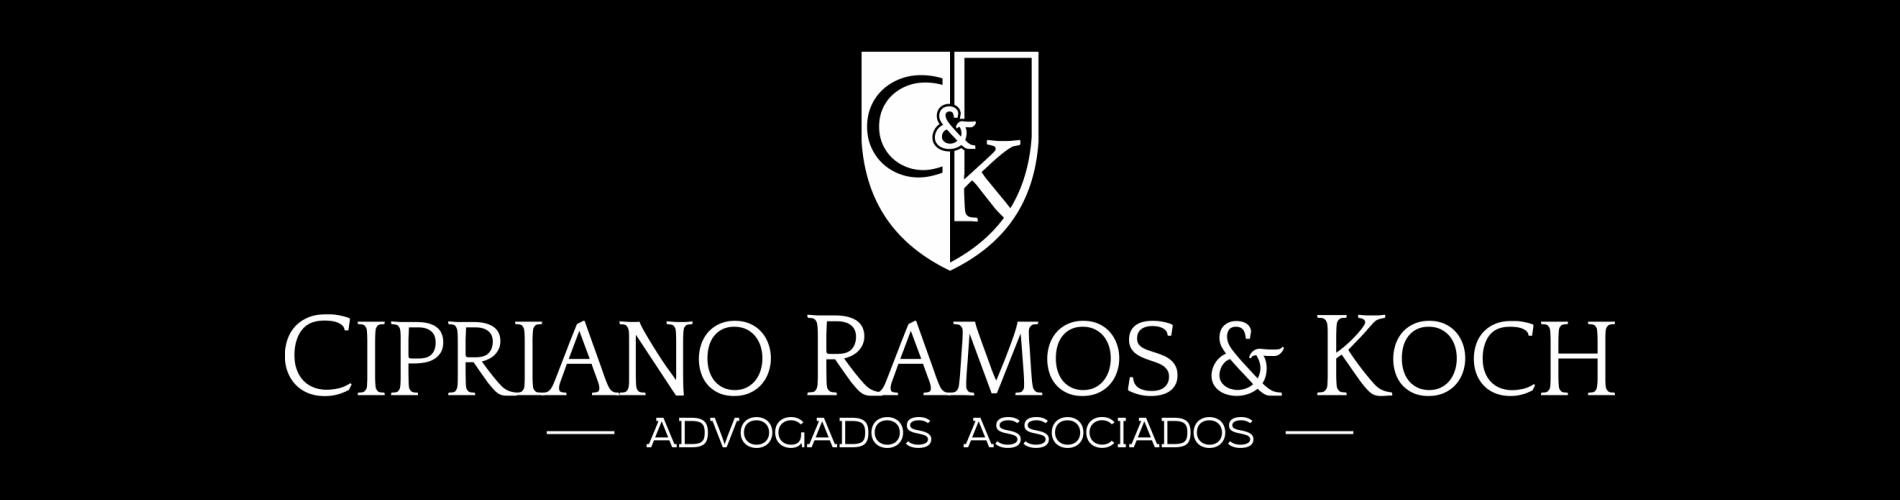 Cipriano Ramos & Koch